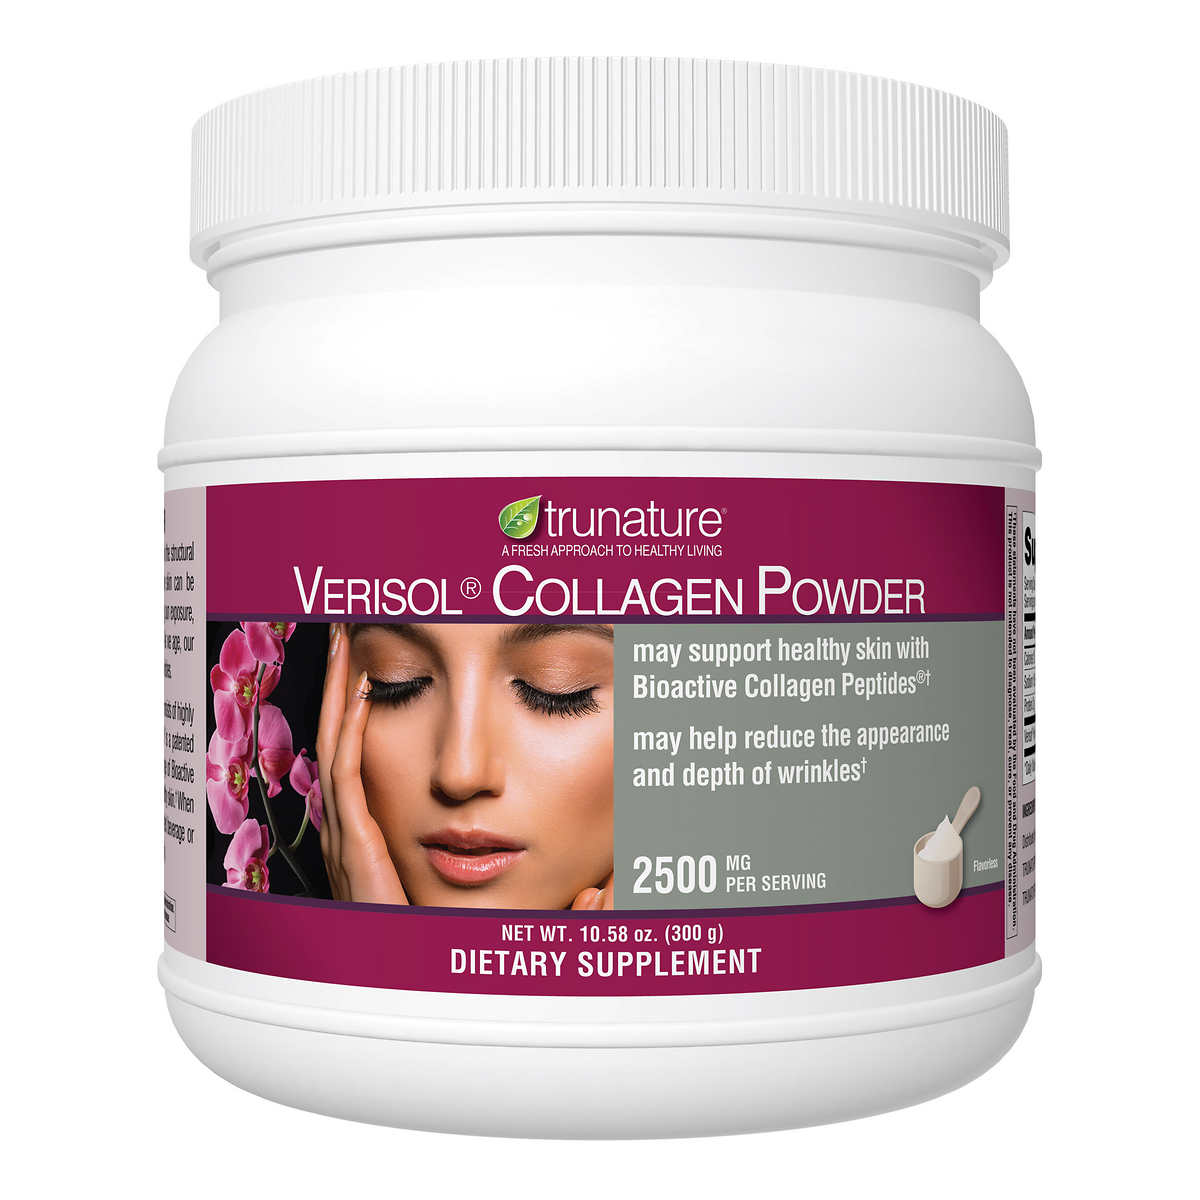 trunature Verisol Collagen Powder 2,500 mg., 10.58 Ounces